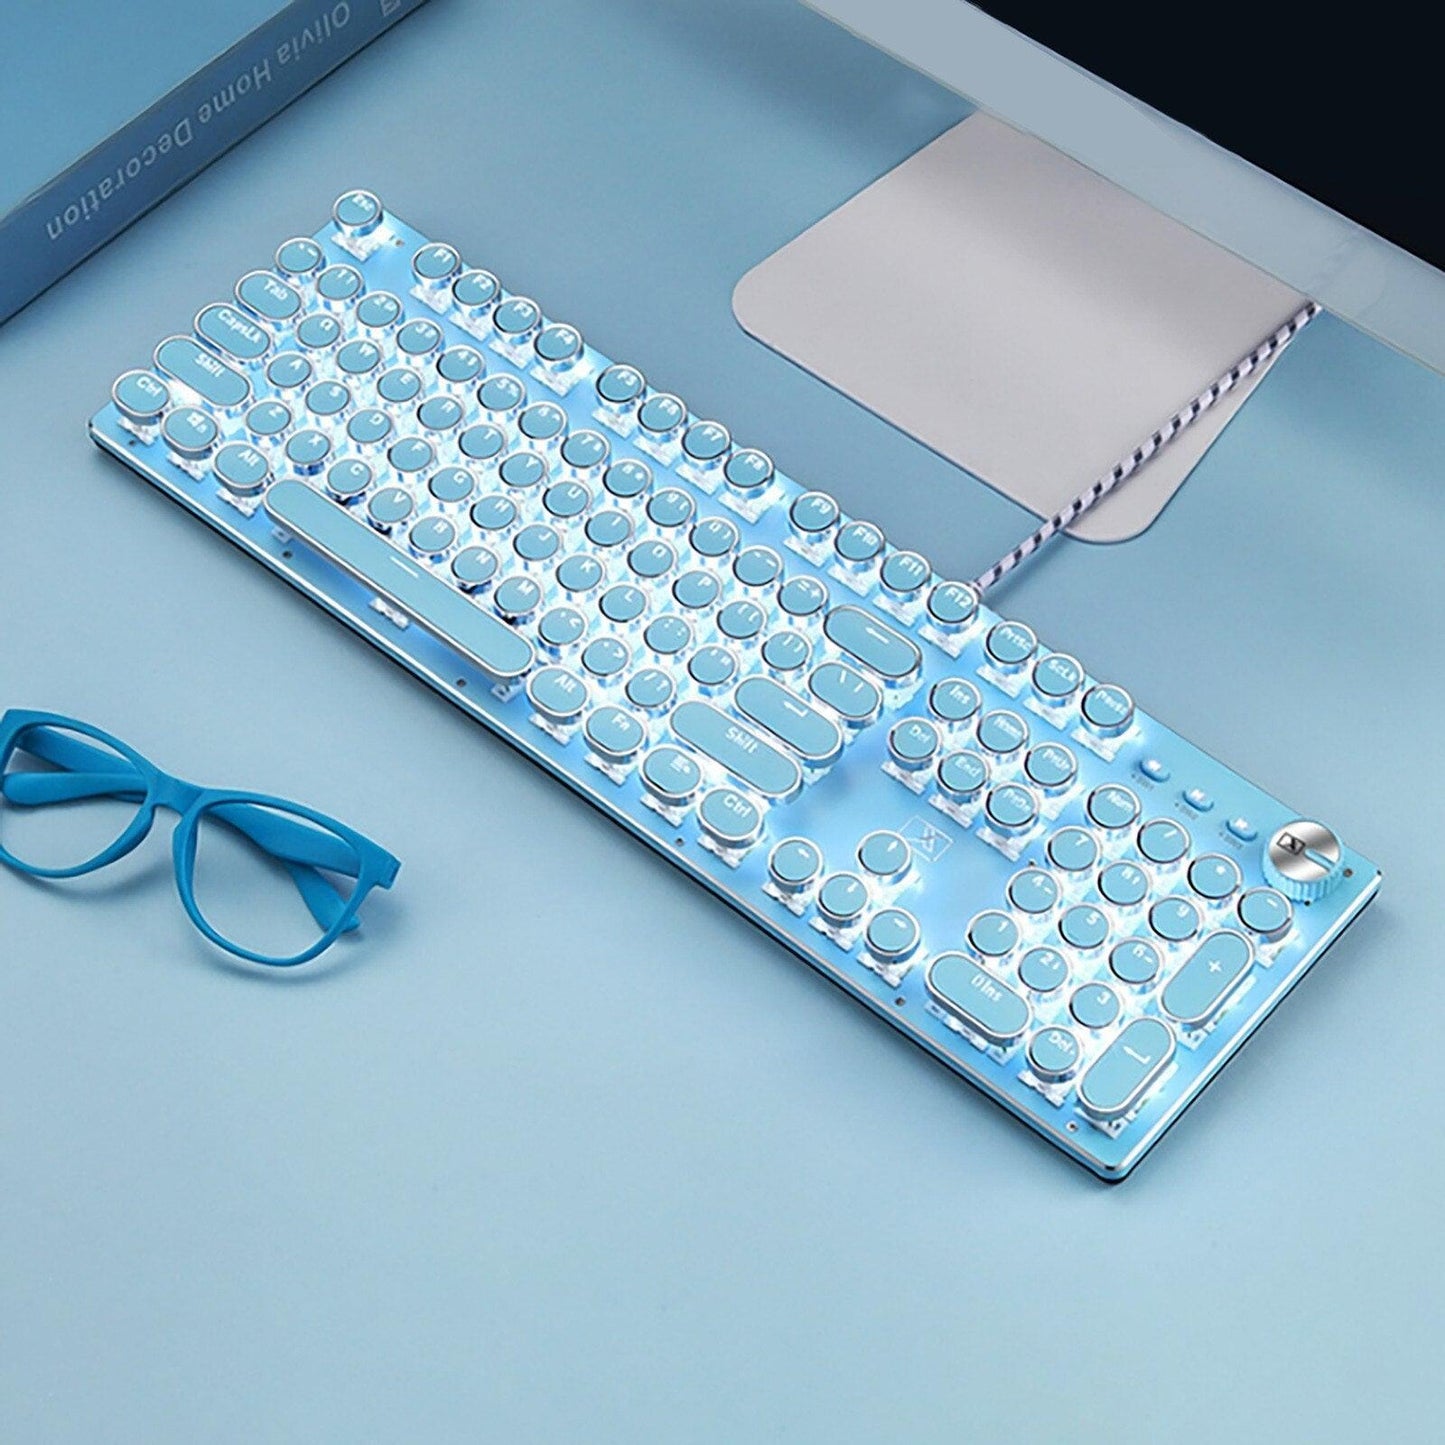  Gaming Fashionable Keyboard sold by Fleurlovin, Free Shipping Worldwide